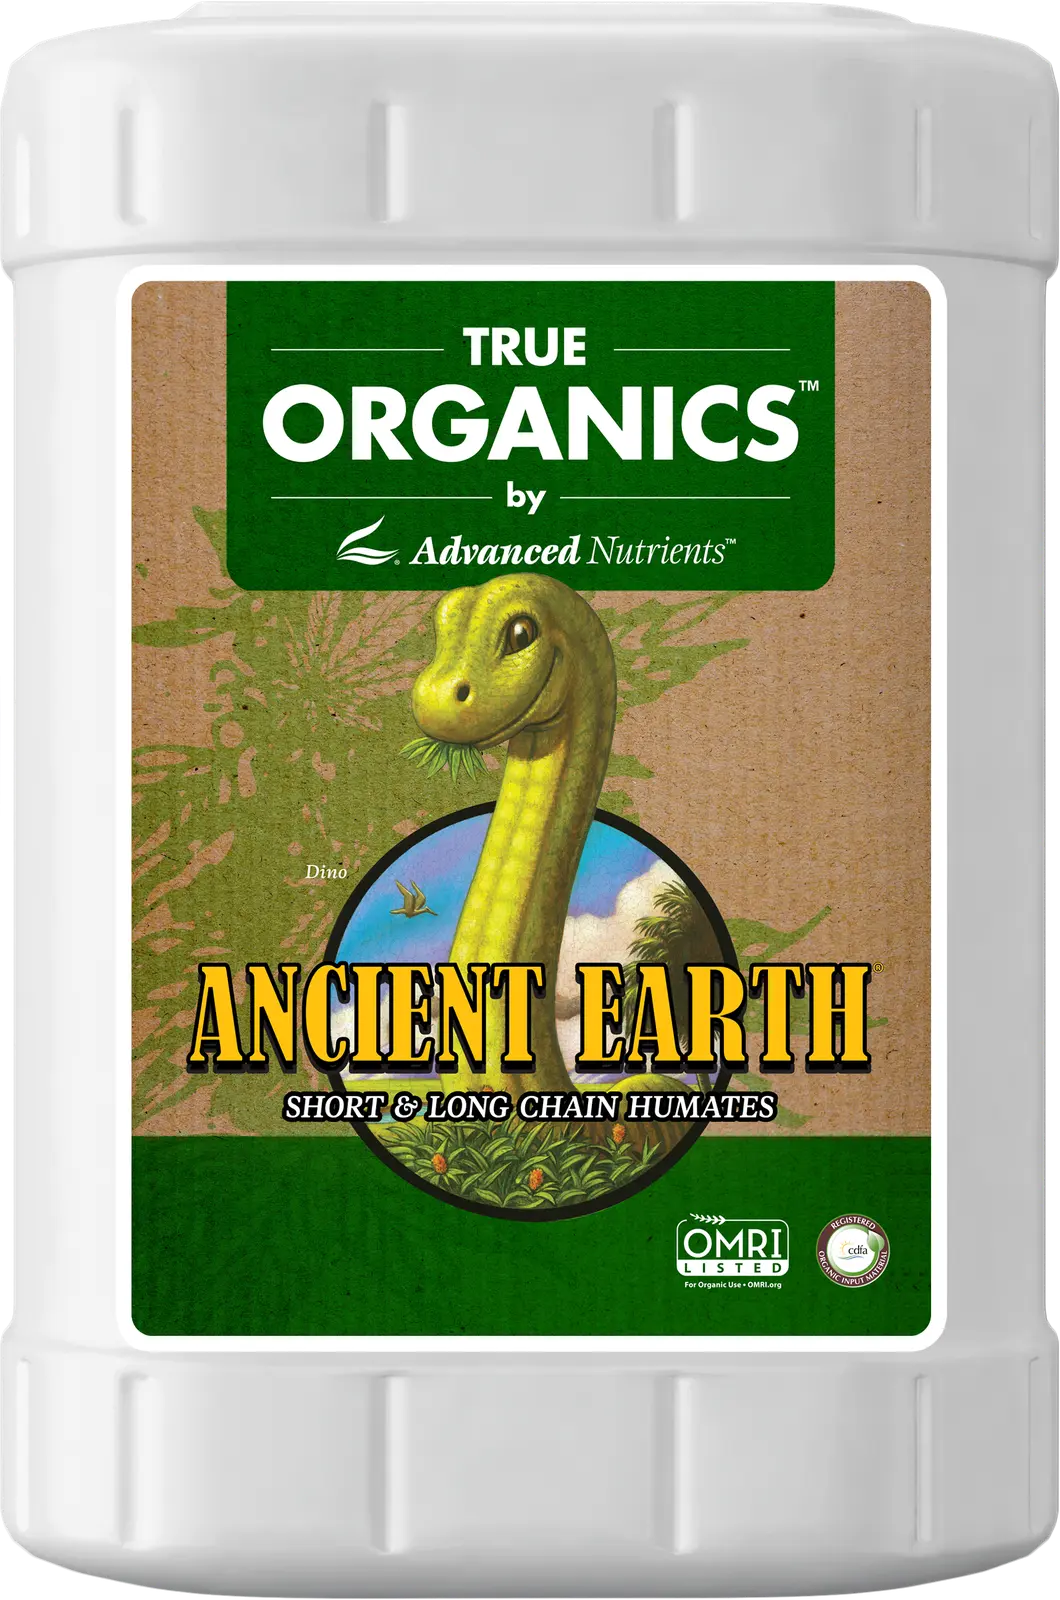 Advanced Nutrients Ancient Earth® OG Organics Advanced Nutrients